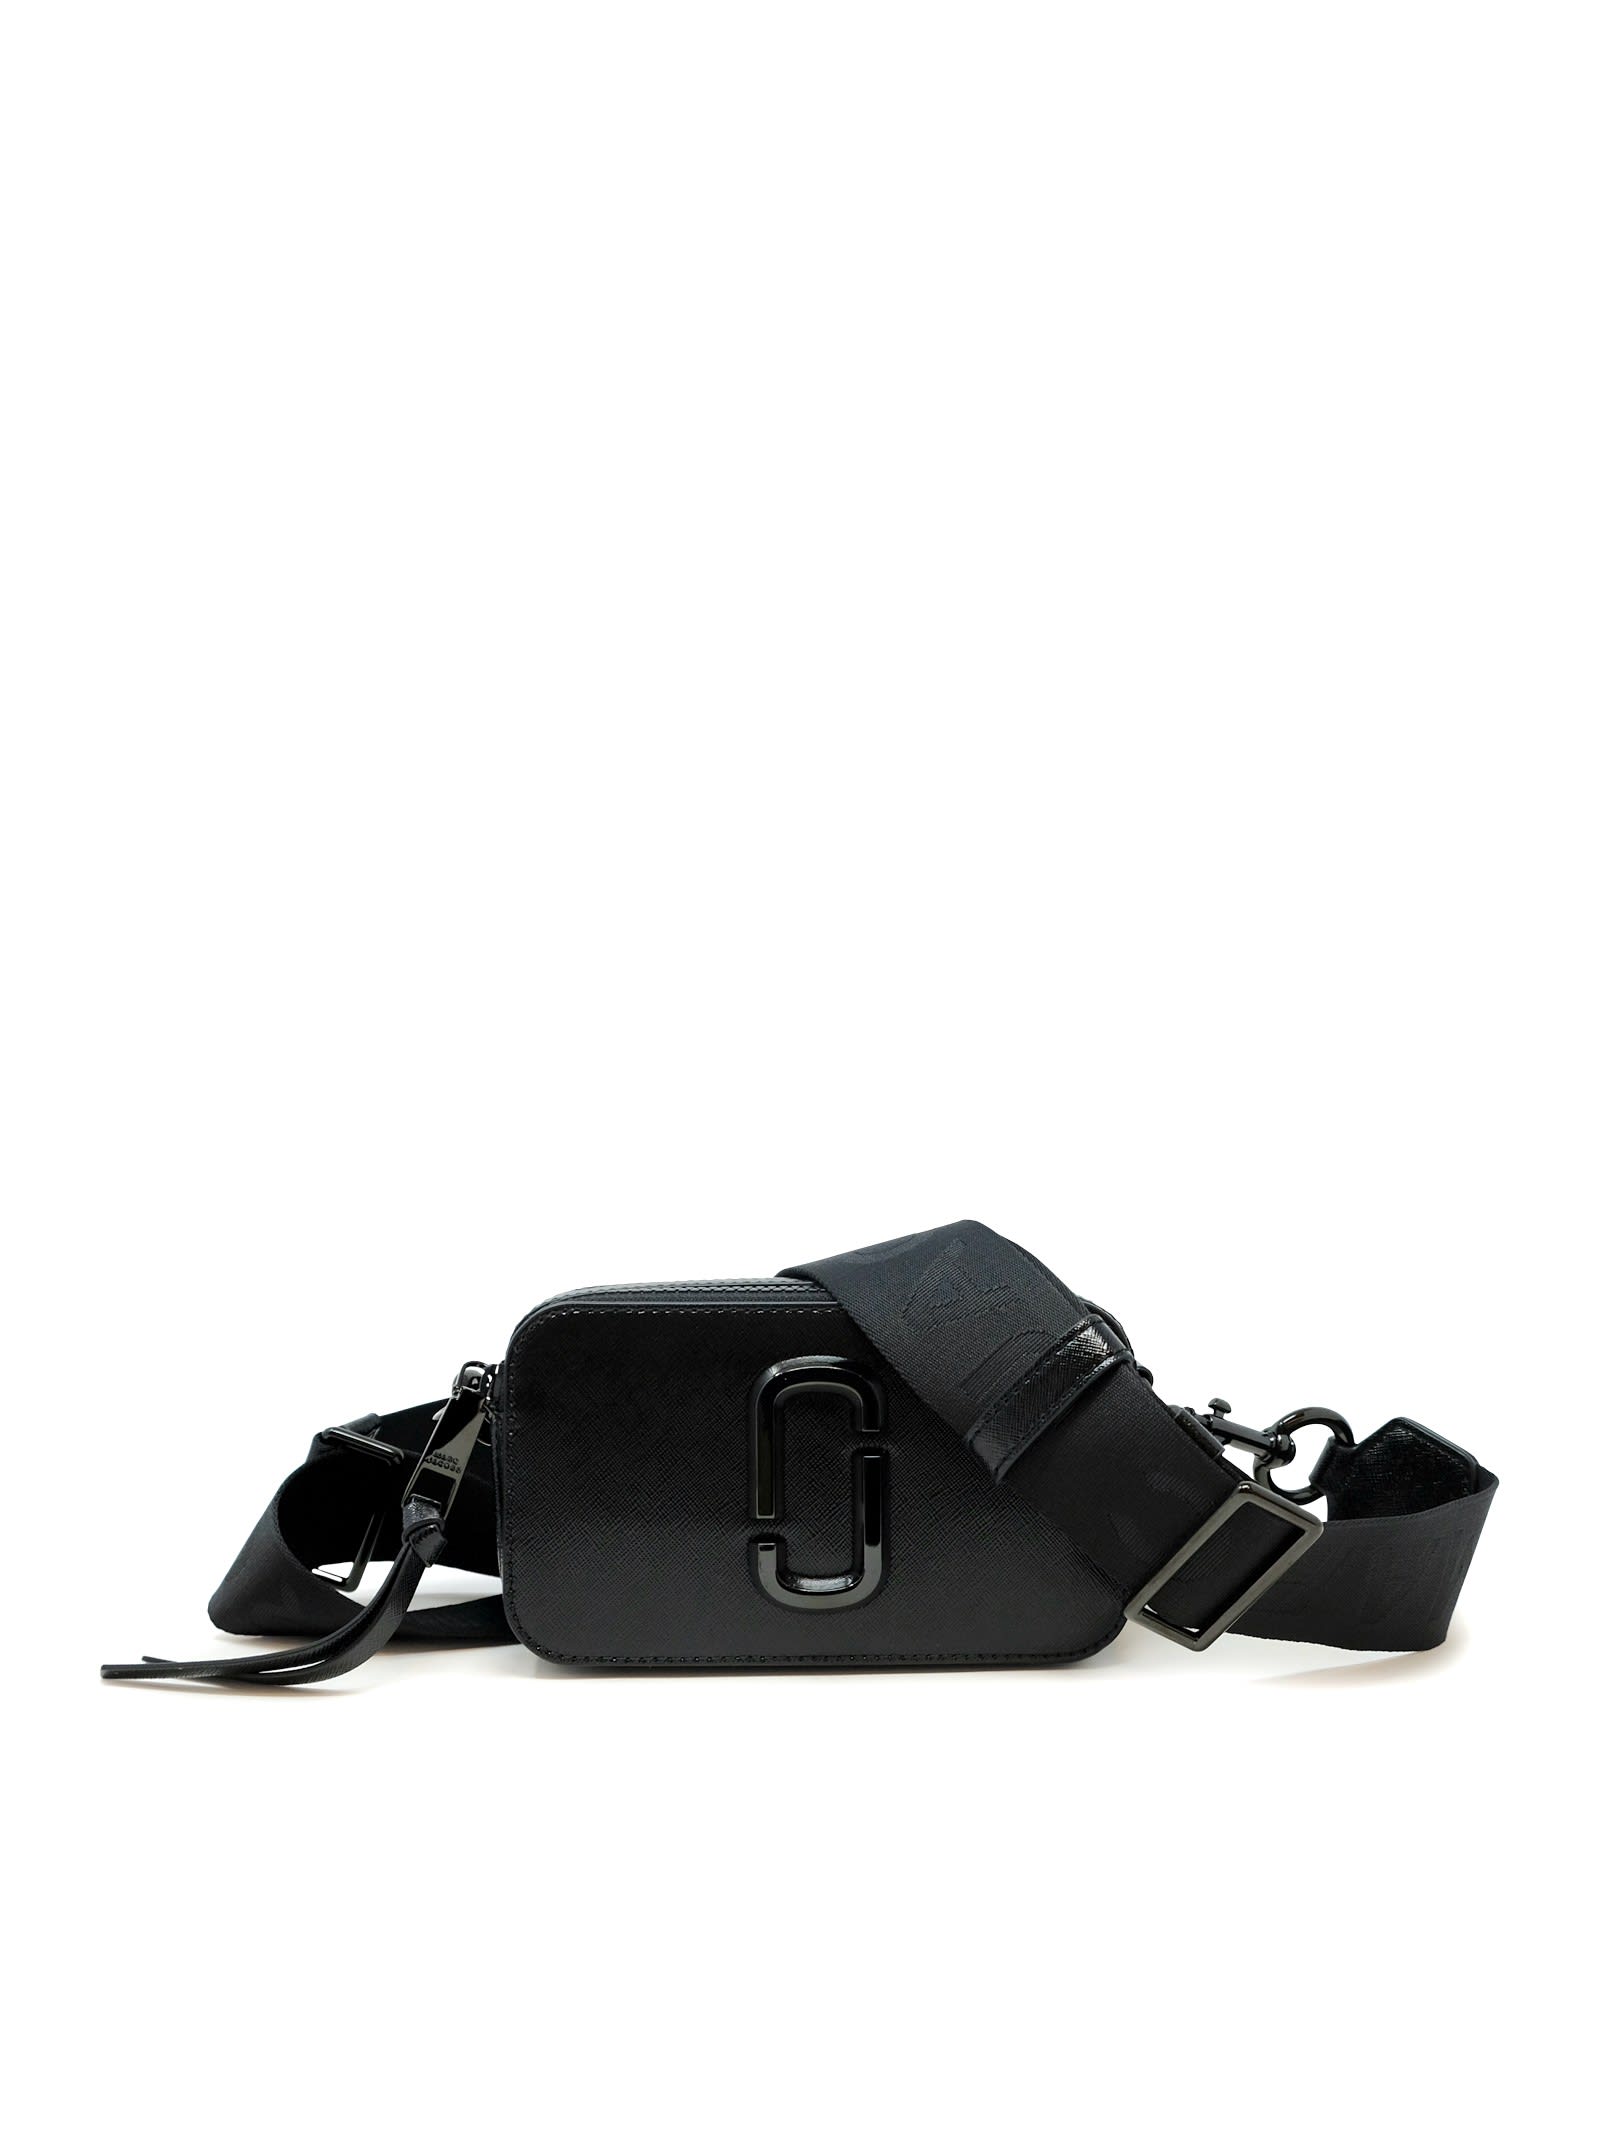 Marc Jacobs Black Leather Snapshot Bag